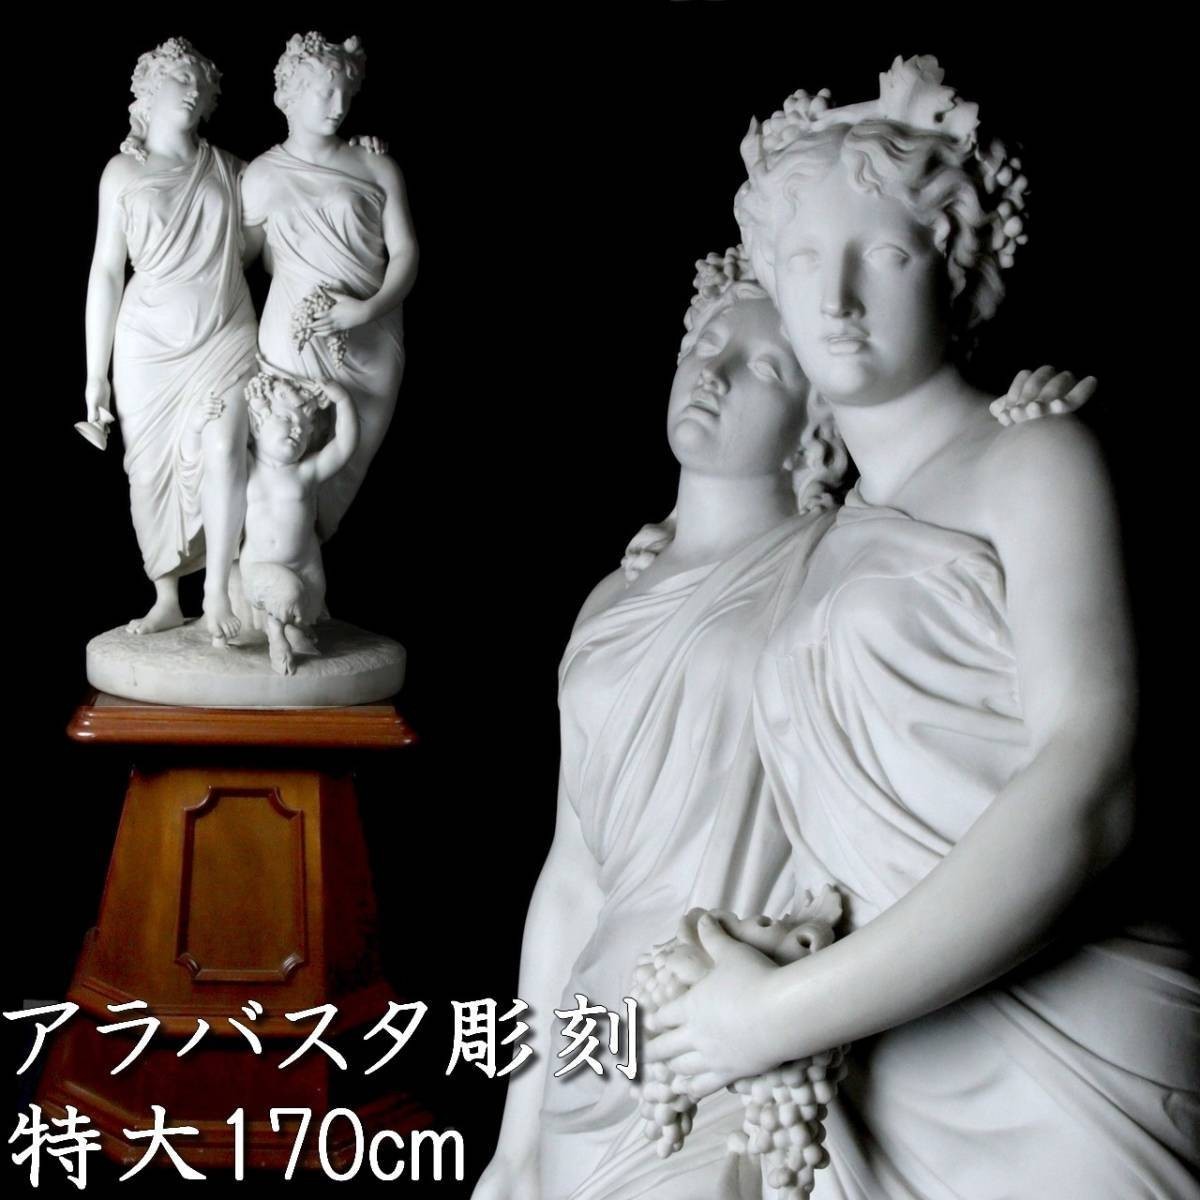 。◆錵◆3 西洋美術 アラバスタ彫刻 大理石 女神像 特大170cm 台付 資産家収蔵品 重量 100kg以上[A314NHIRO.KEN]OUm/23.6廻//(H)_画像1